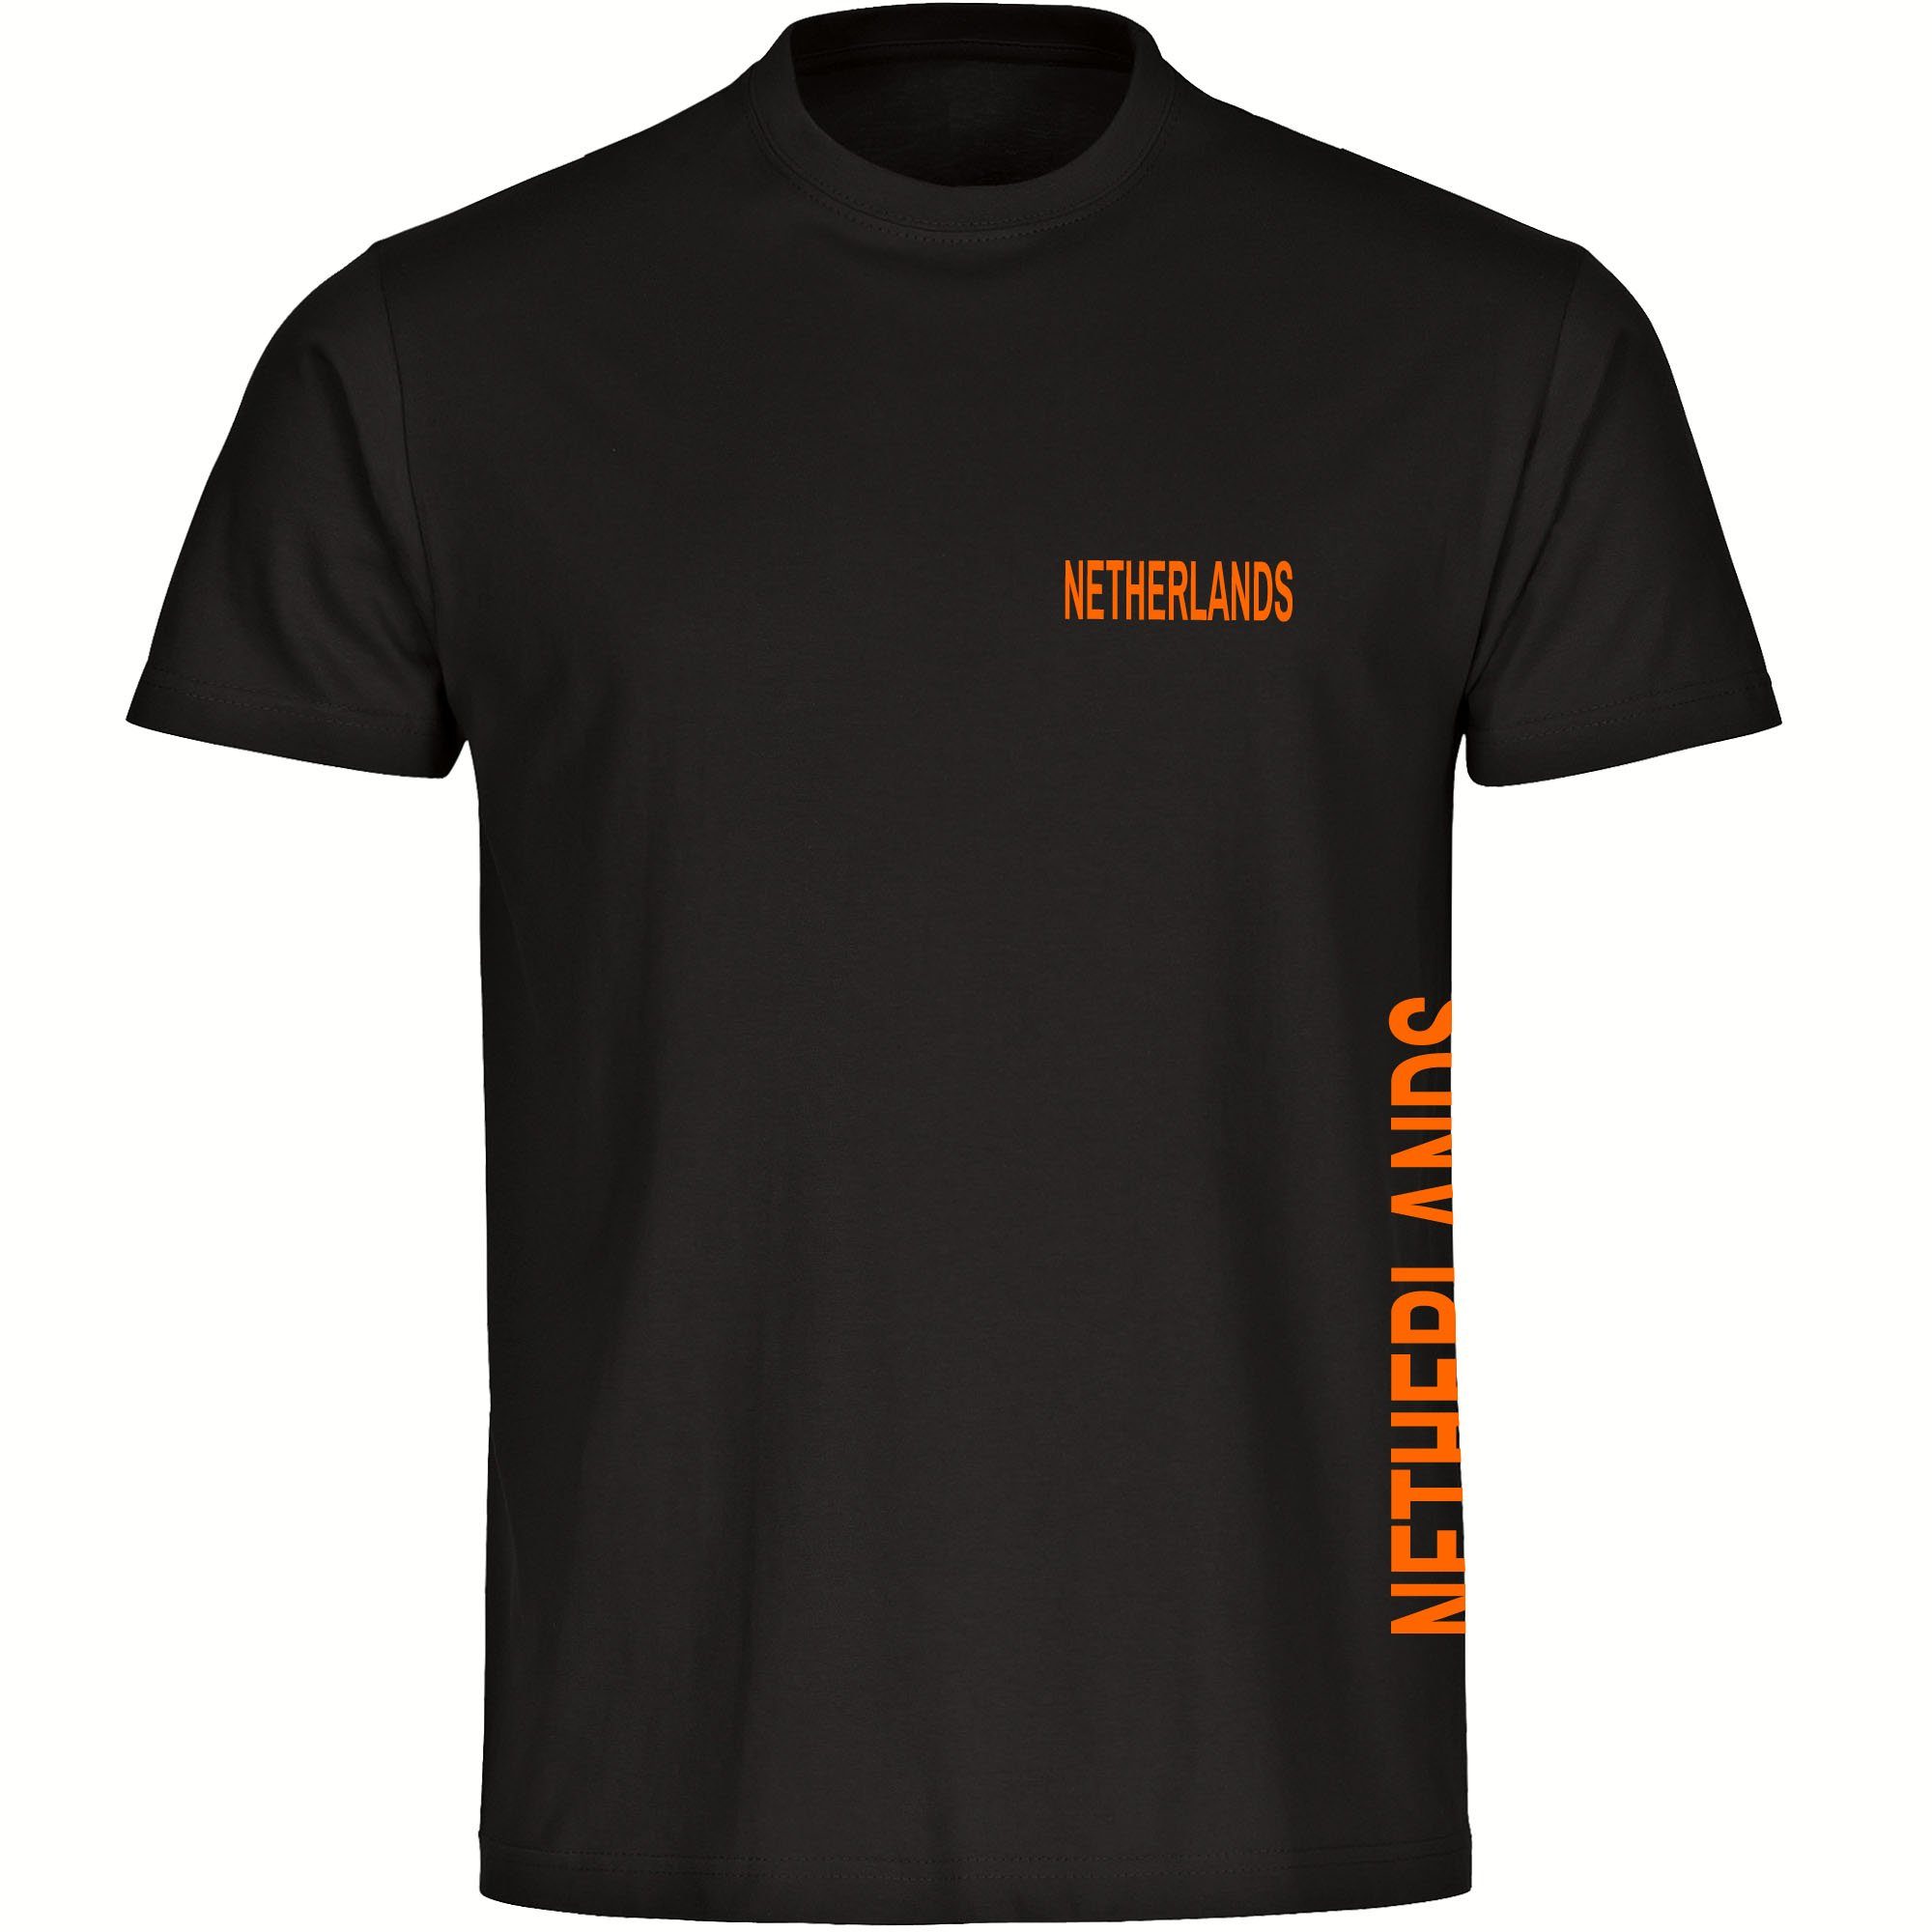 multifanshop T-Shirt Kinder Netherlands - Brust & Seite - Boy Girl